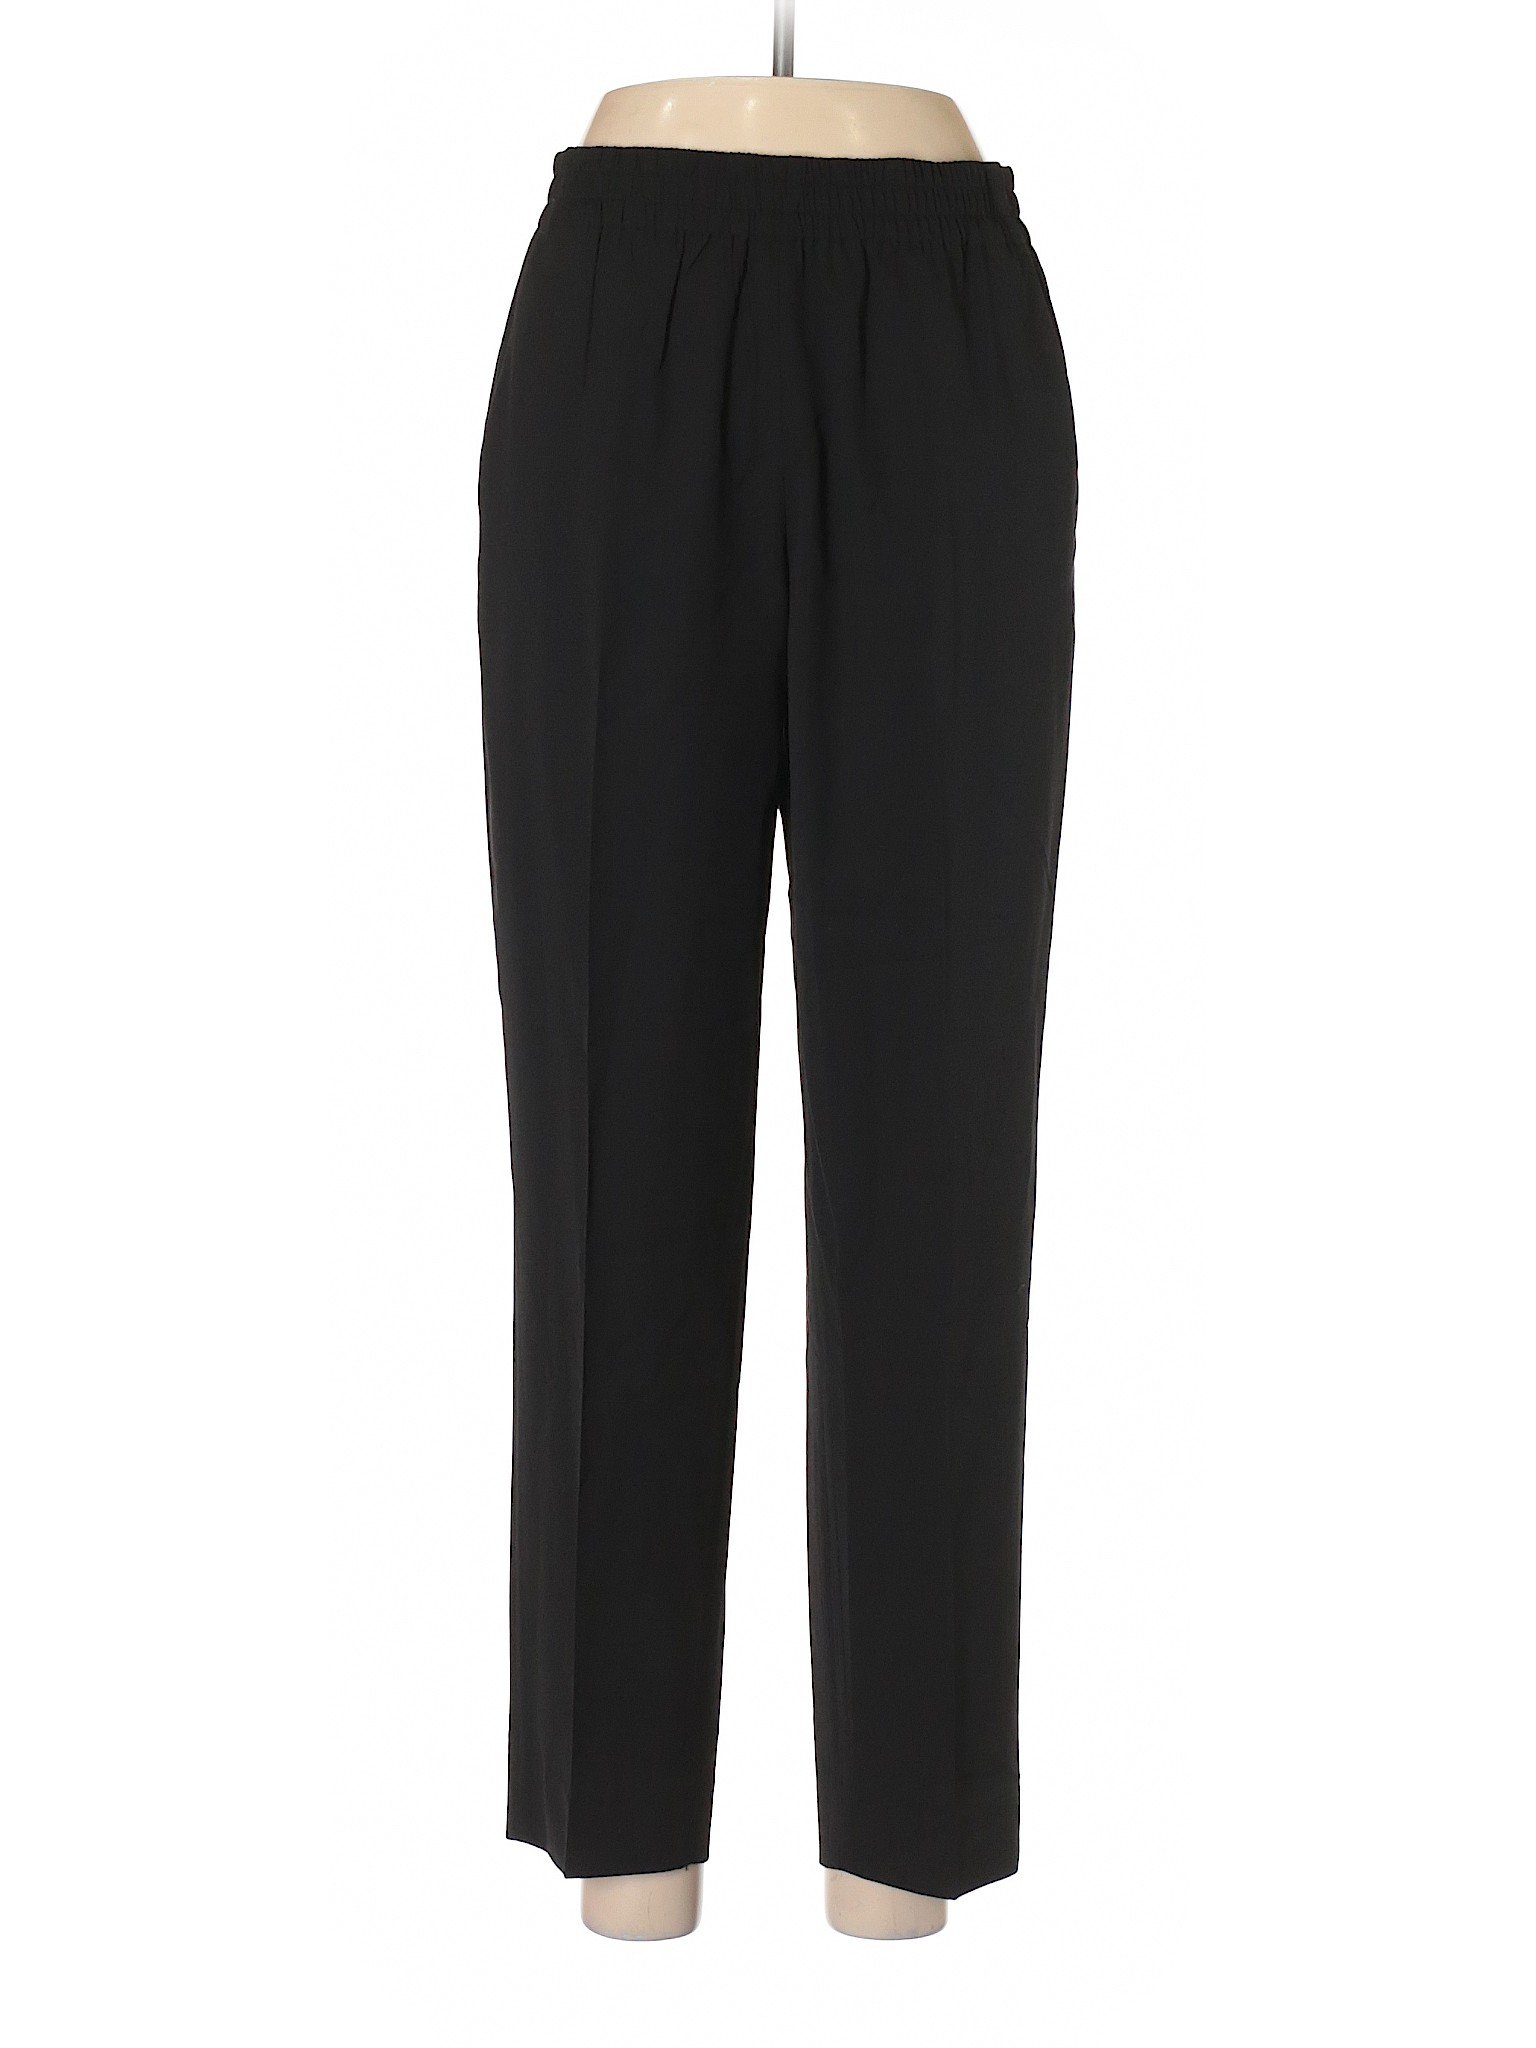 Everlane Women Black Wool Pants 6 | eBay